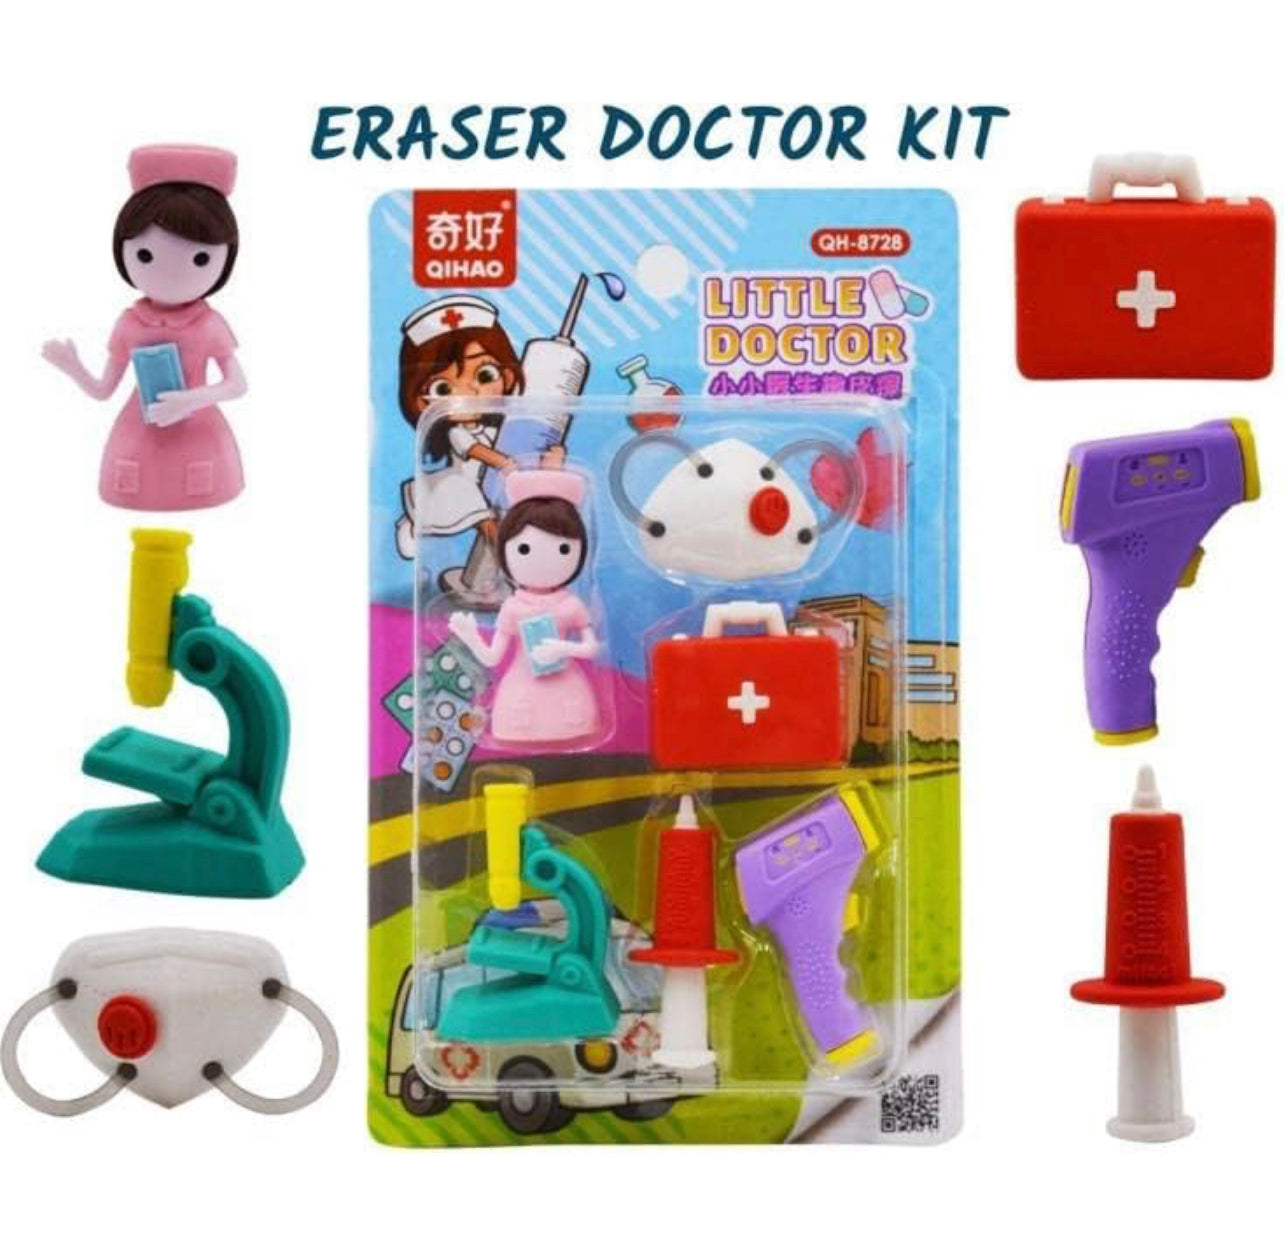 Little Doctor Erasers